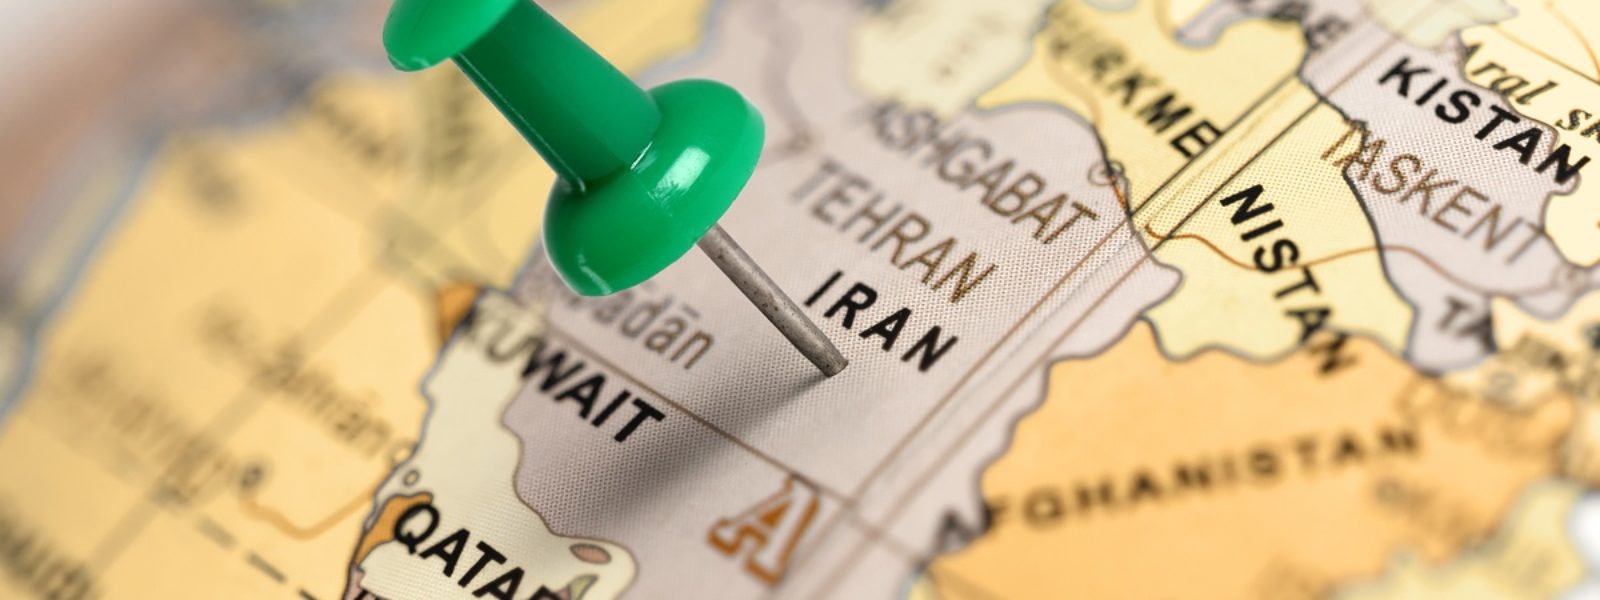 AdobeStock_79753785 Location Iran. Green pin on the map.